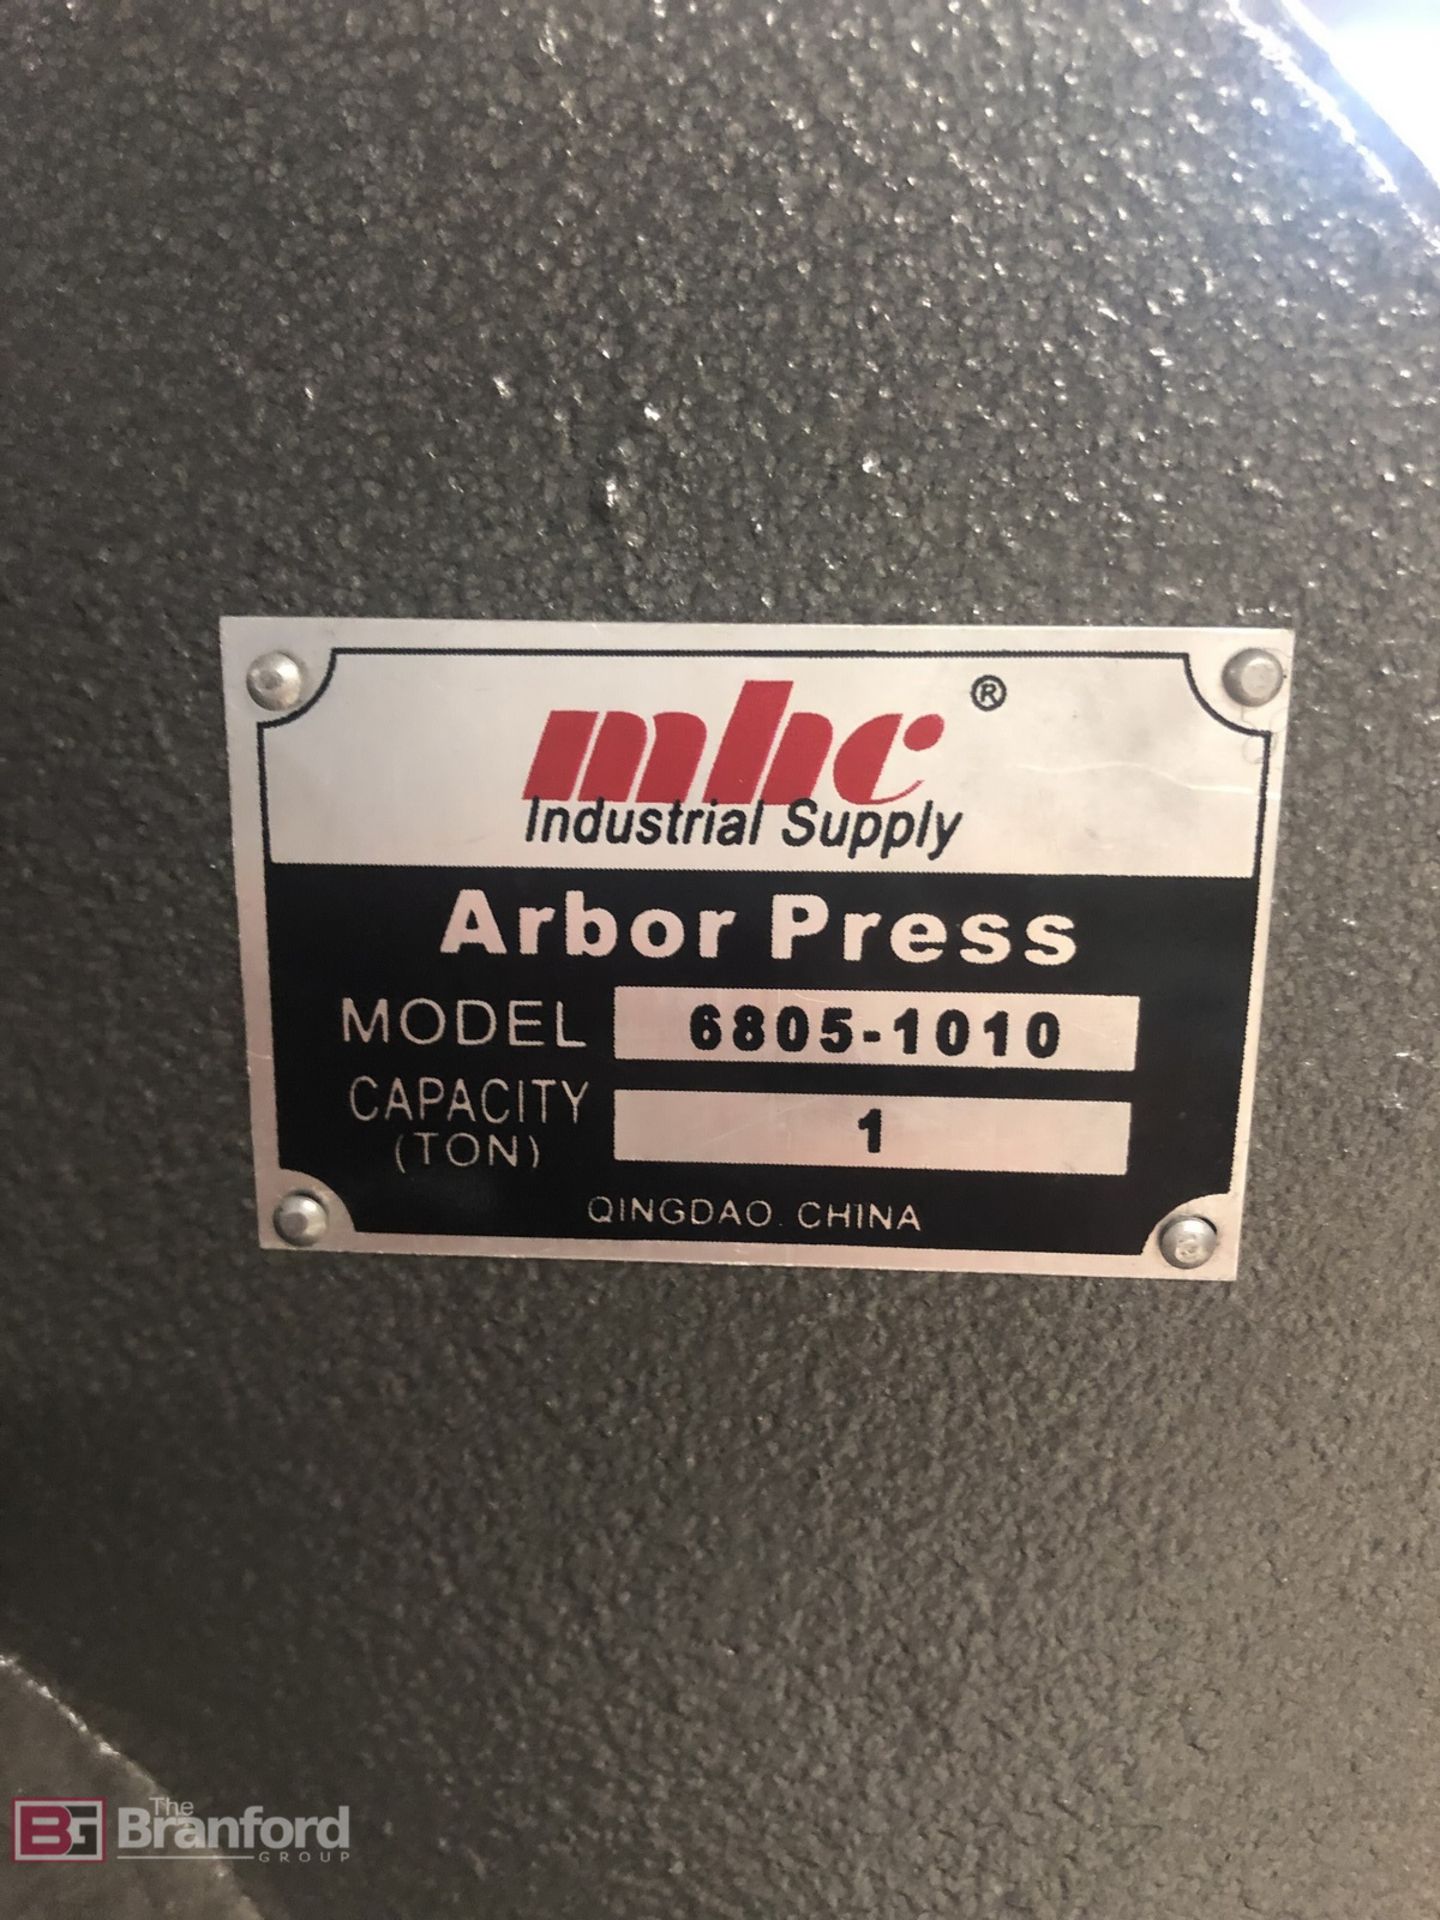 (4) MBC Industrial Supply Model 6805-1010 Arbor Presses - Image 2 of 4